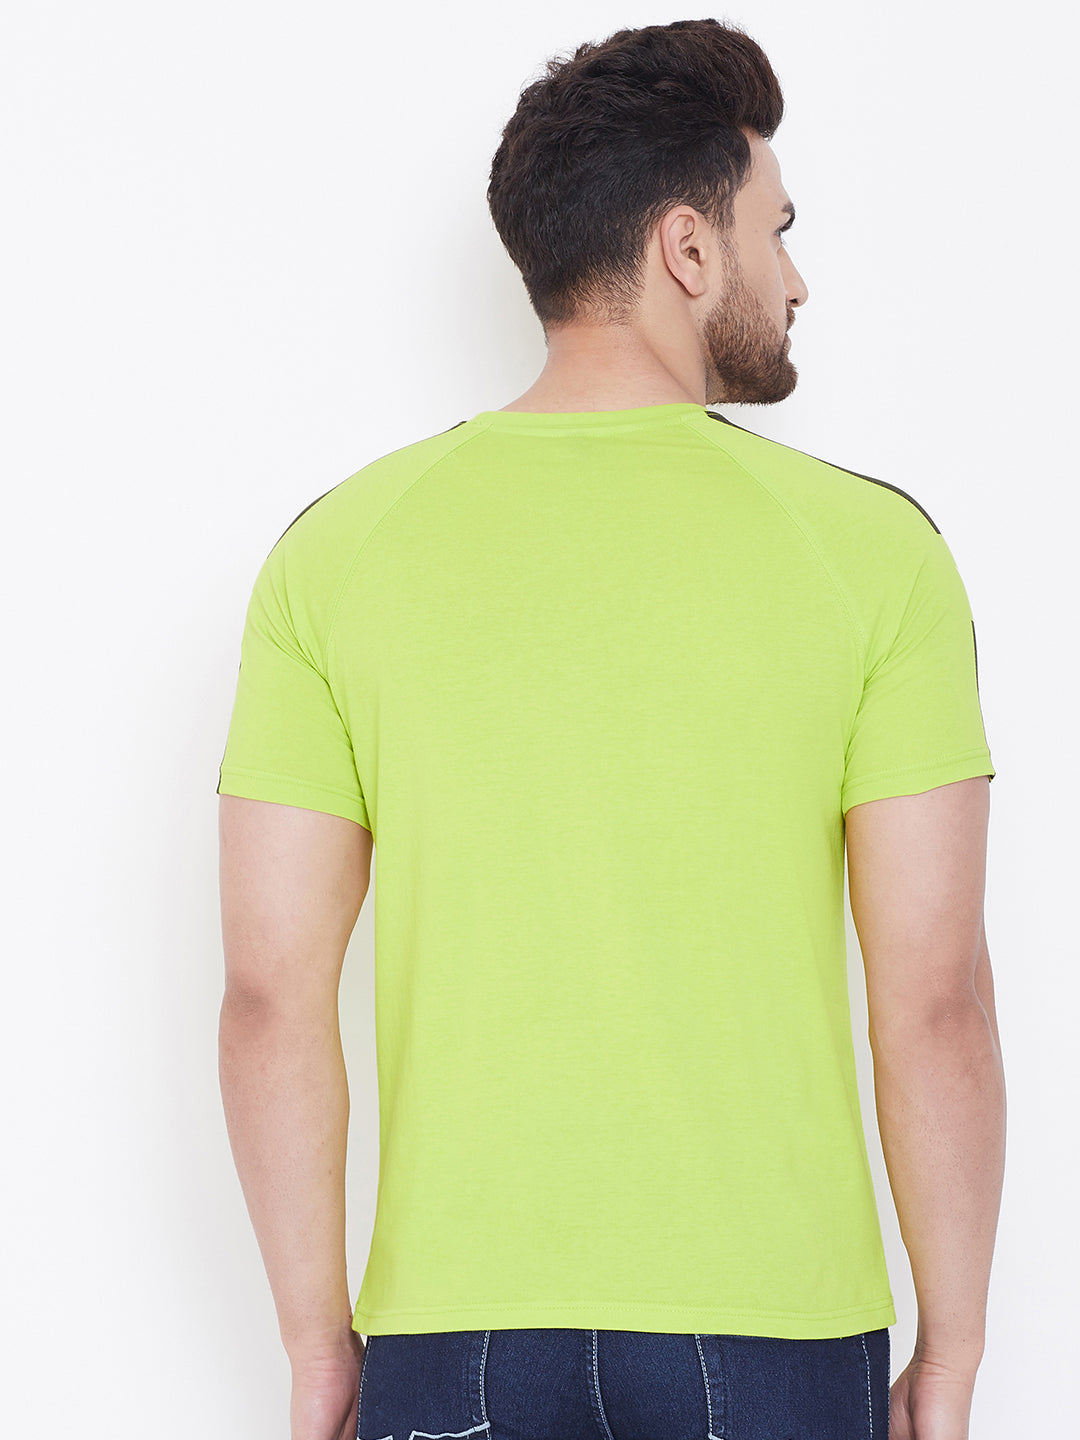 Neon Green Printed Men's Half Sleeves Round Neck T-Shirt